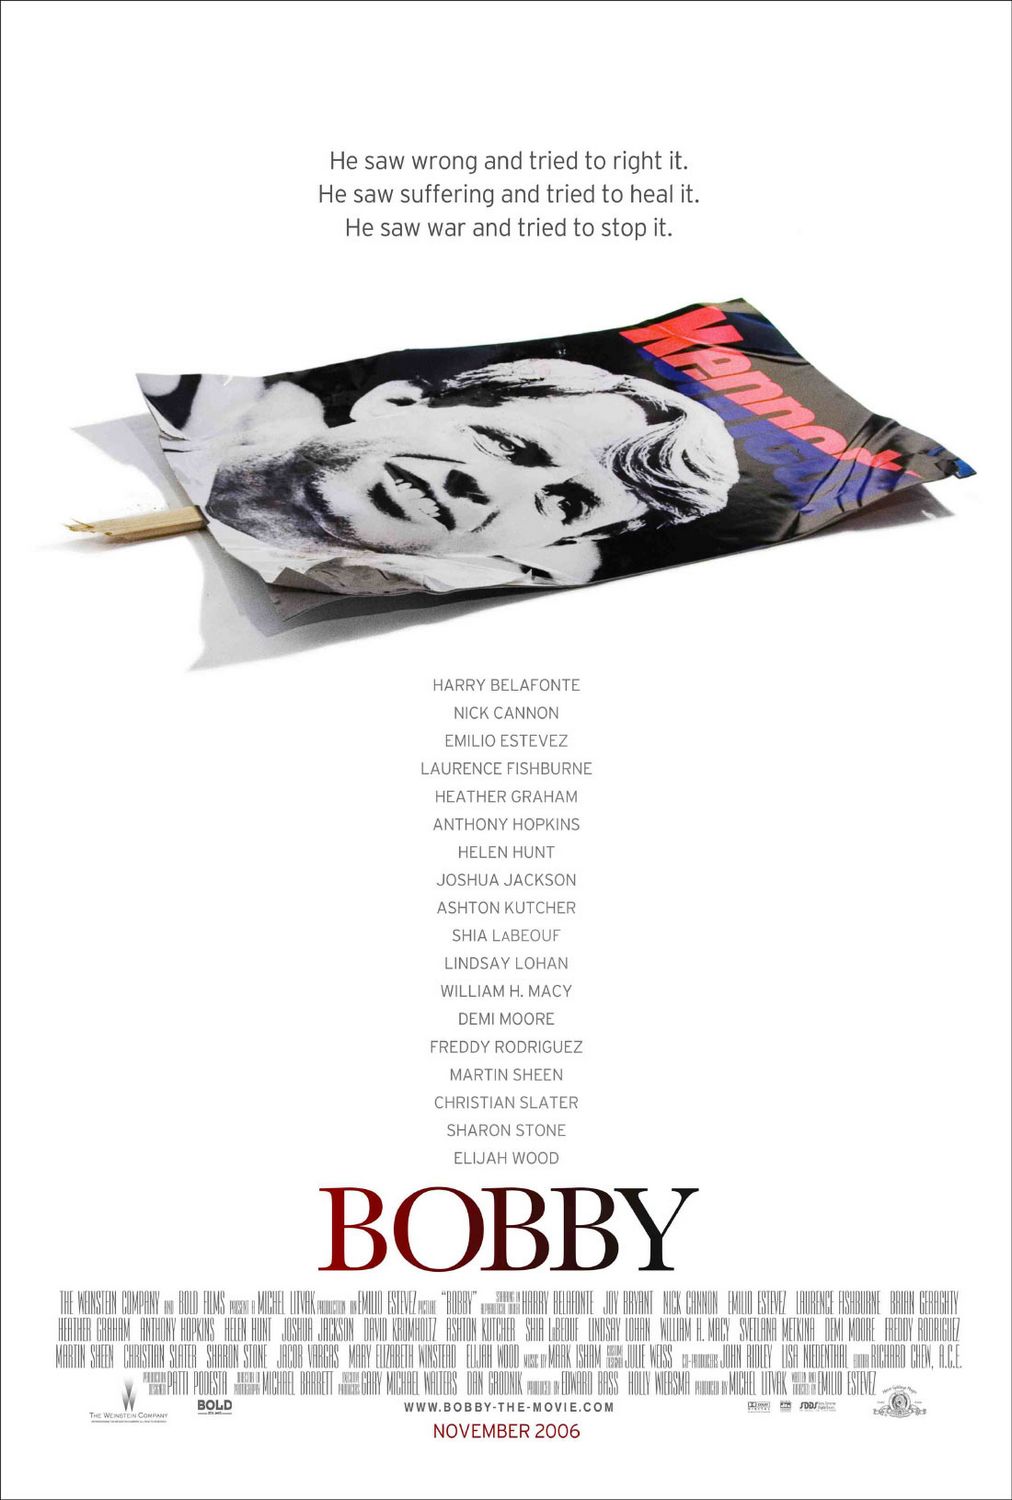 Постер - Бобби: 1012x1500 / 139 Кб